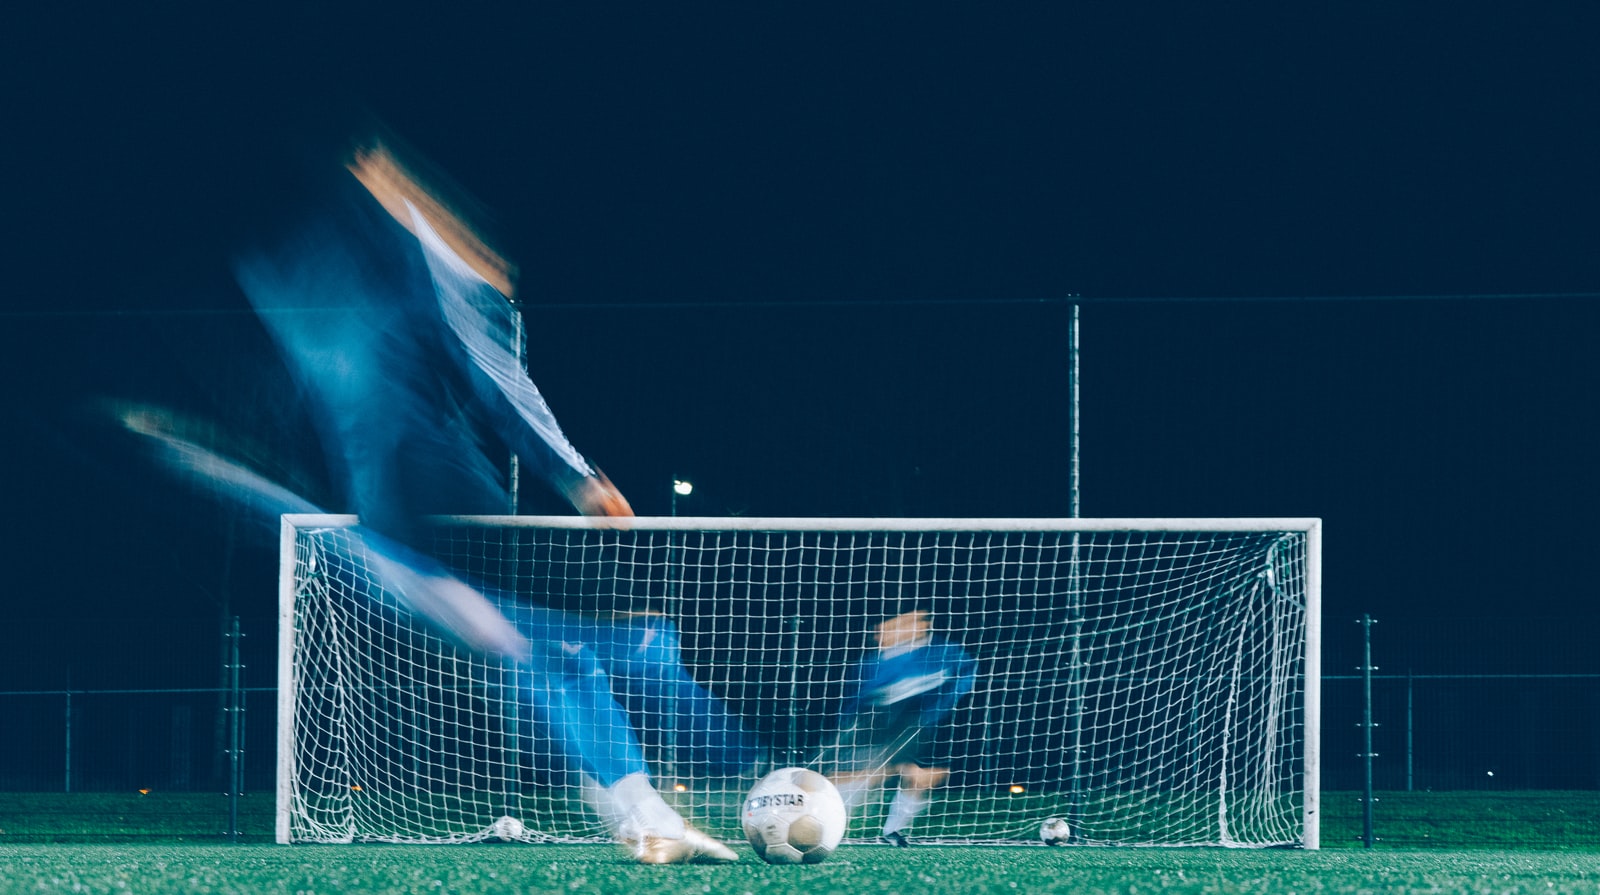 timelapse photo of soccer player kicking ball